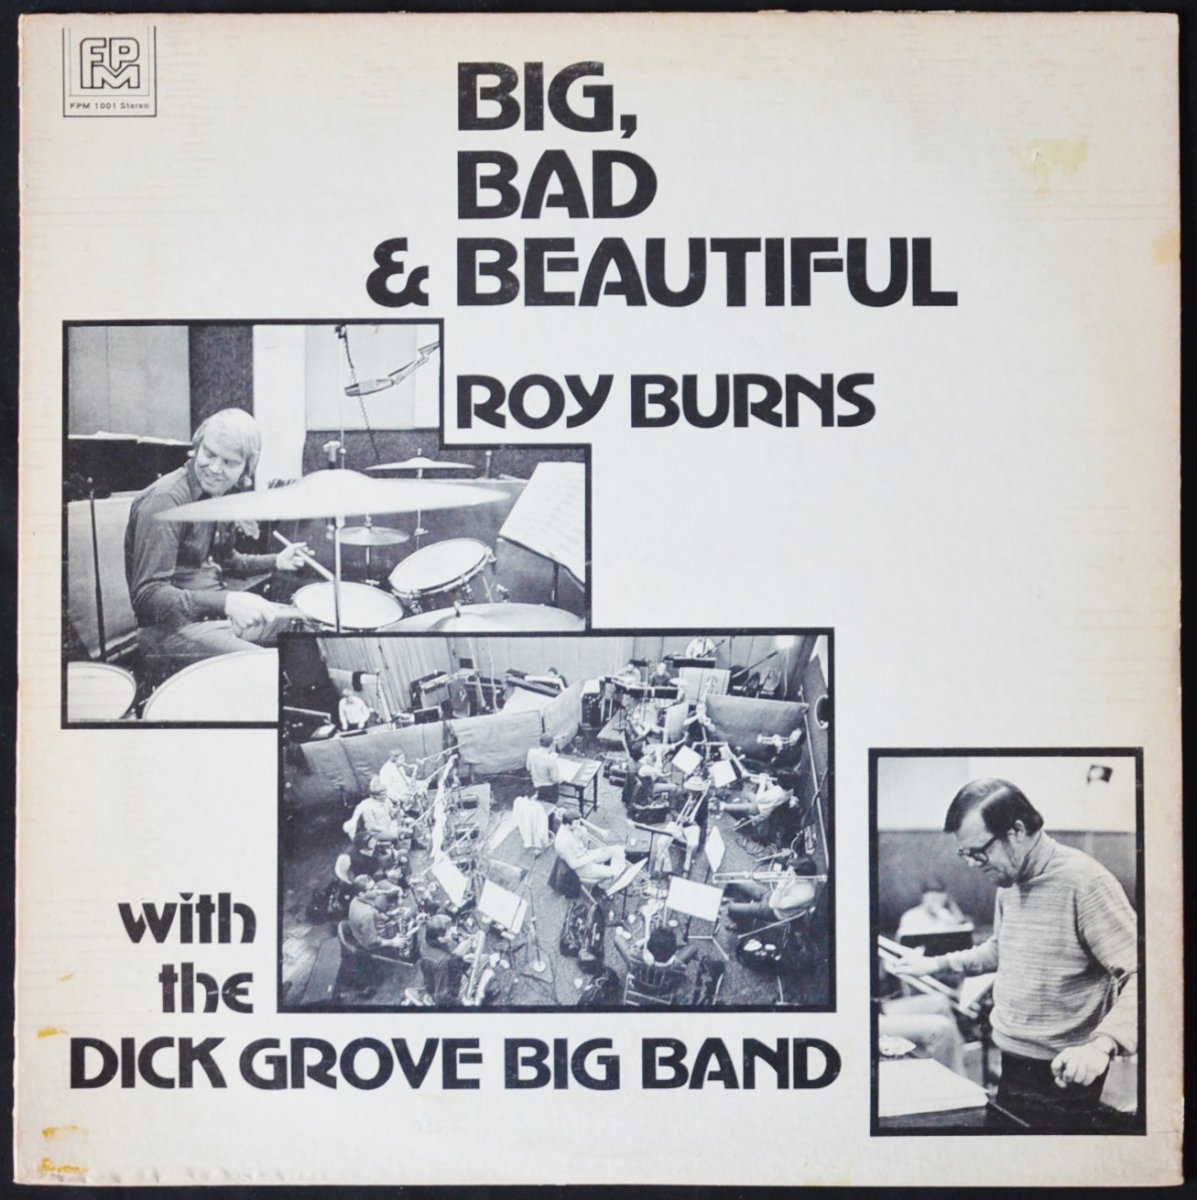 ROY BURNS WITH THE DICK GROVE BIG BAND / BIG, BAD & BEAUTIFUL (LP)